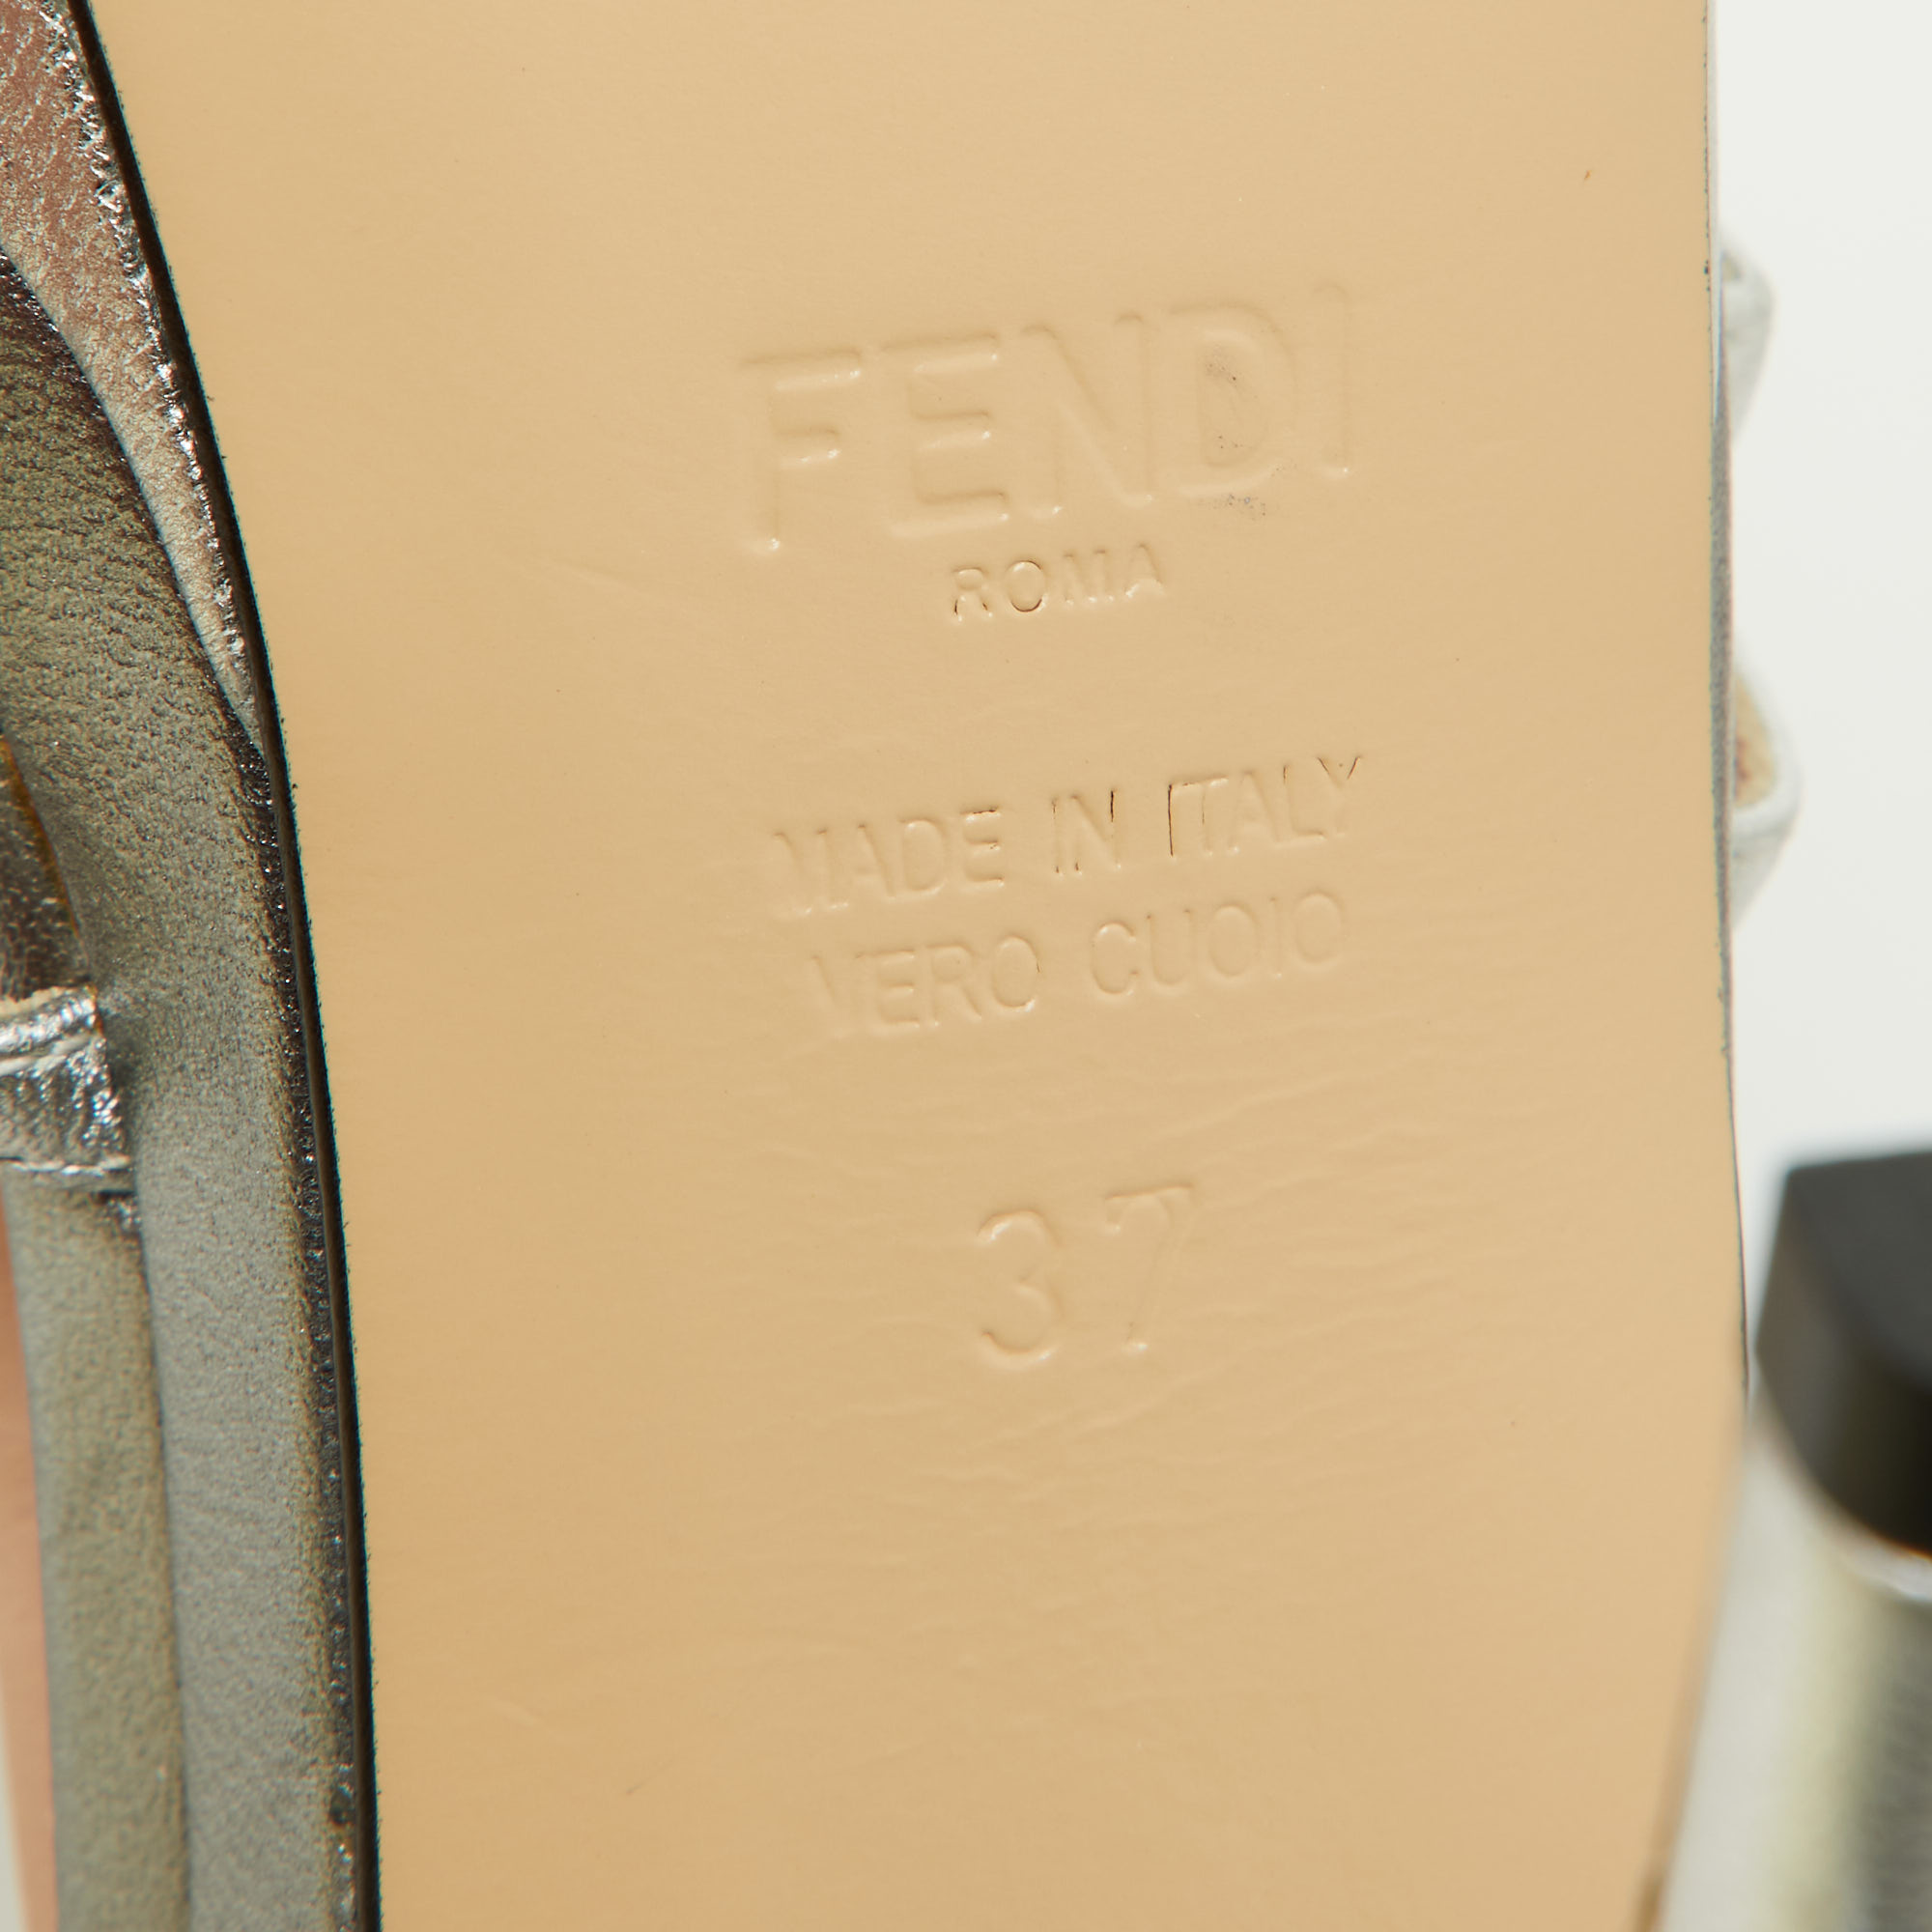 Fendi Silver Leather Strappy T-Bar Platform Sandals Size 37